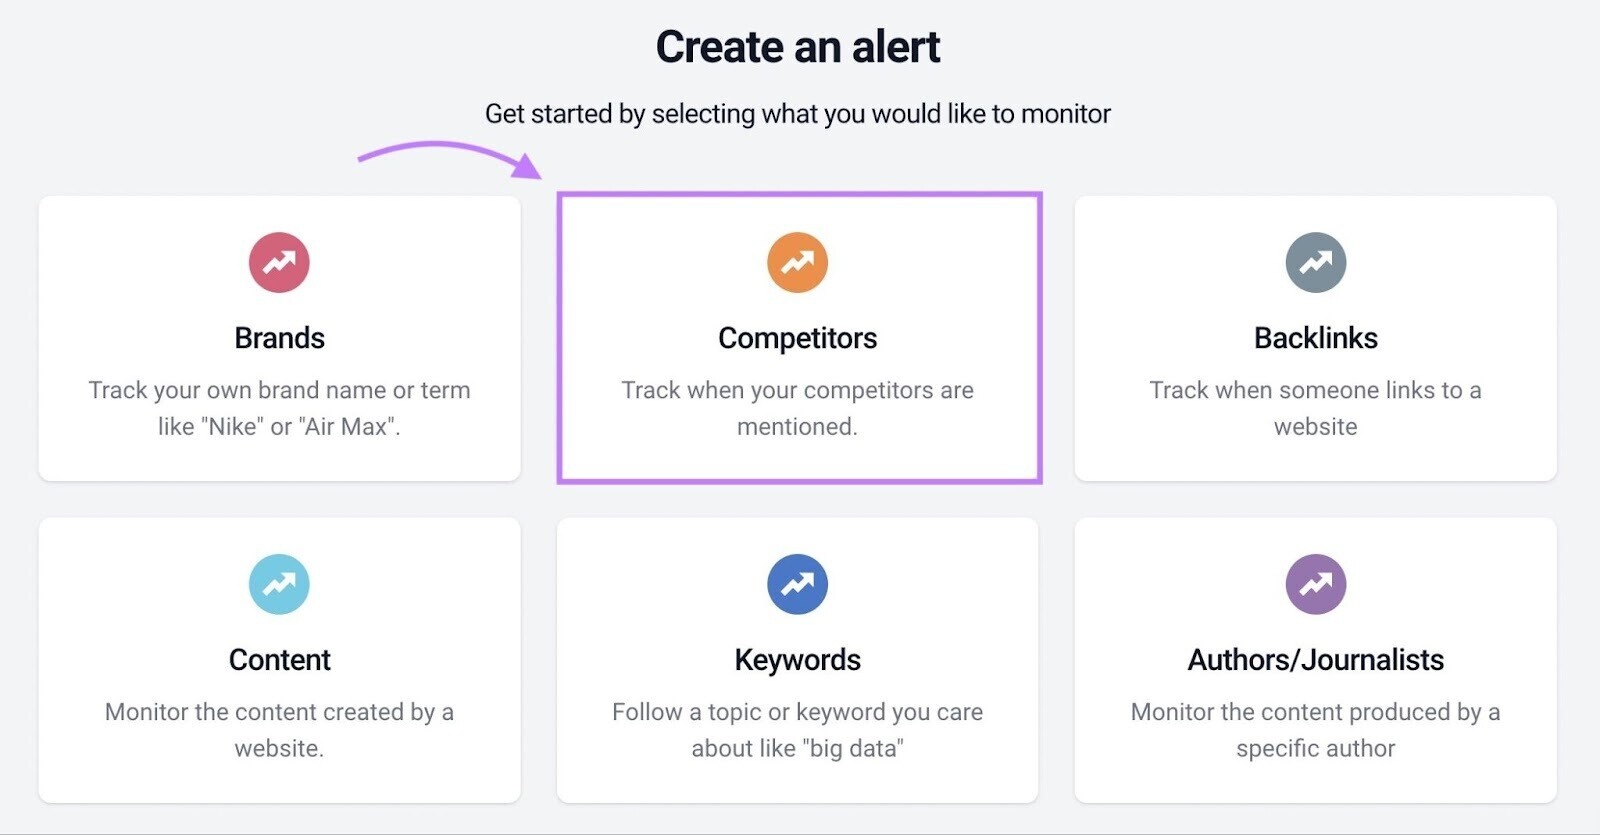 BuzzSumo’s "Create an alert" page